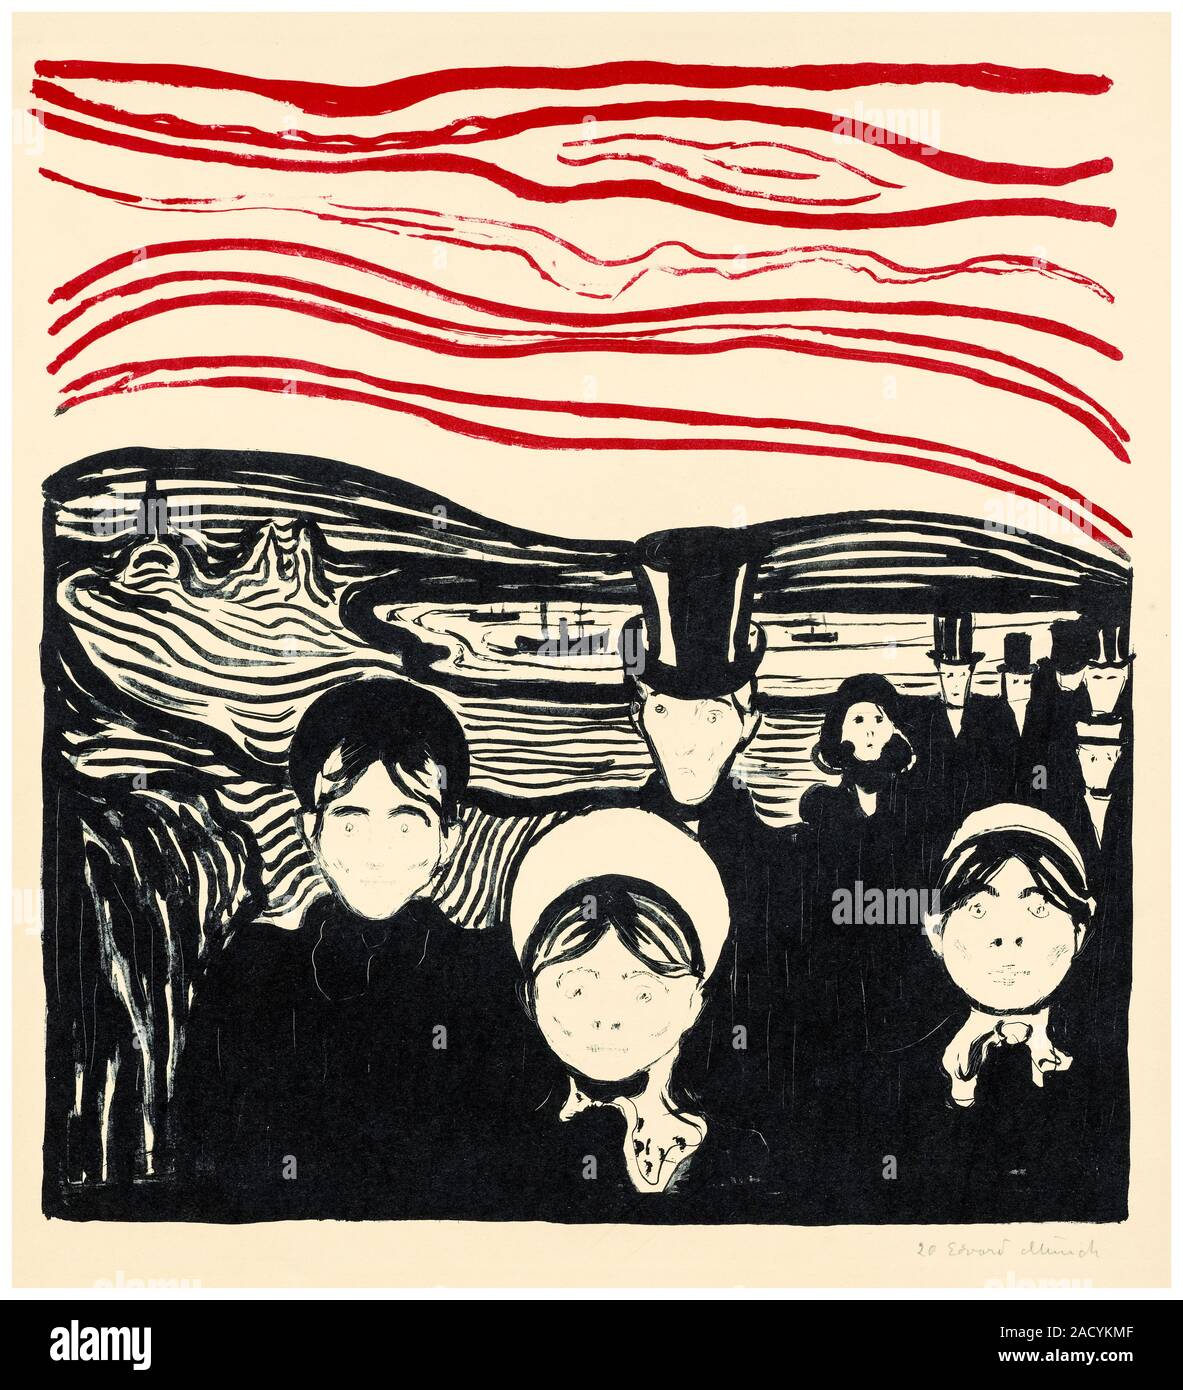 Edvard Munch, Anxiety, (Angst), print, 1896 Stock Photo